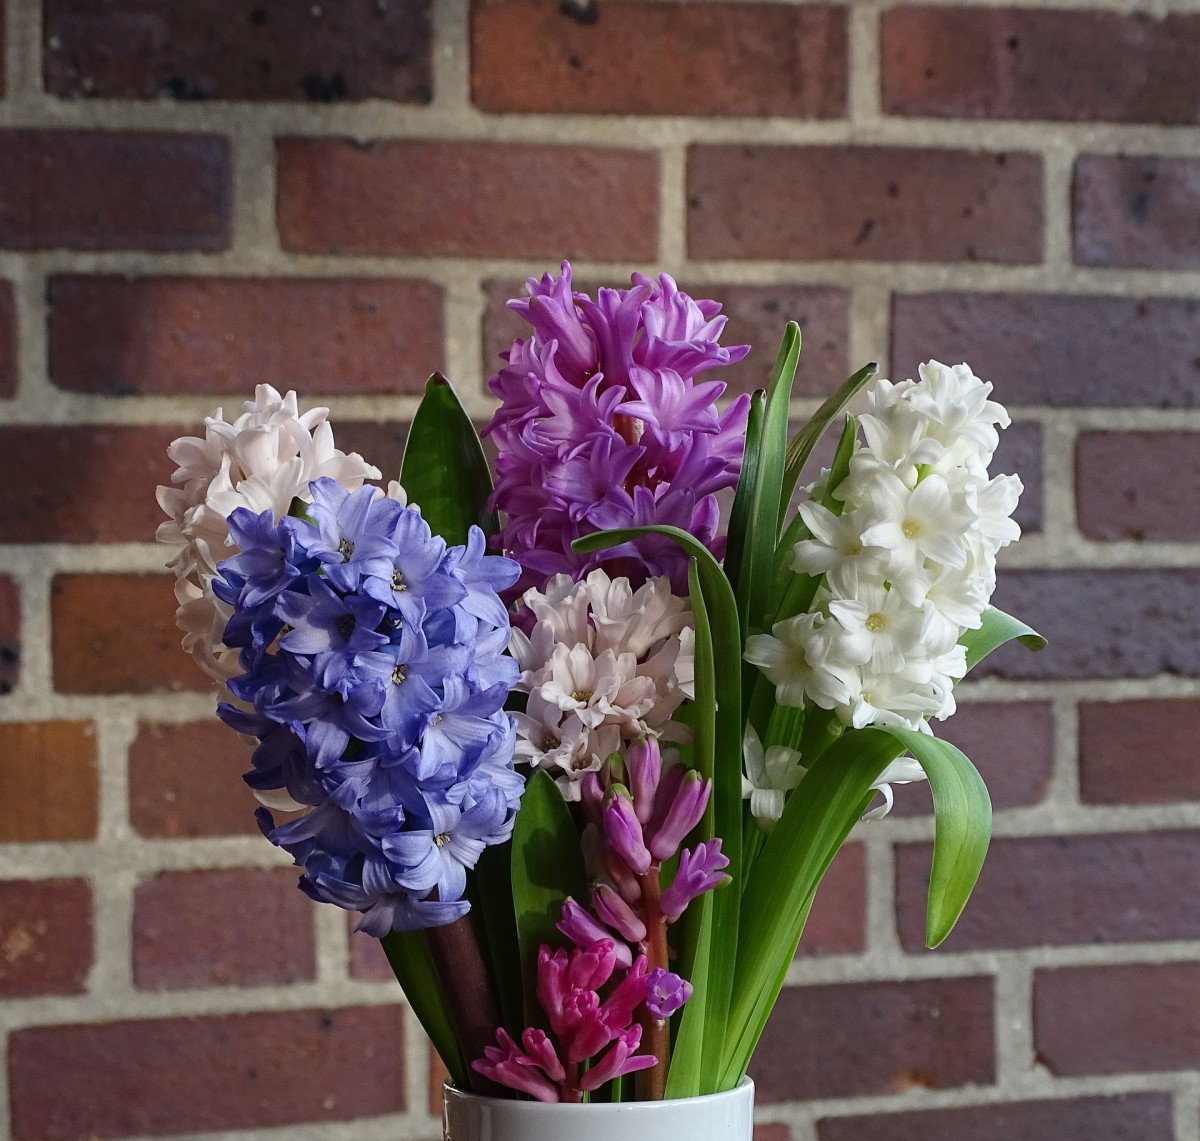 You can grow hyacinth indoors!